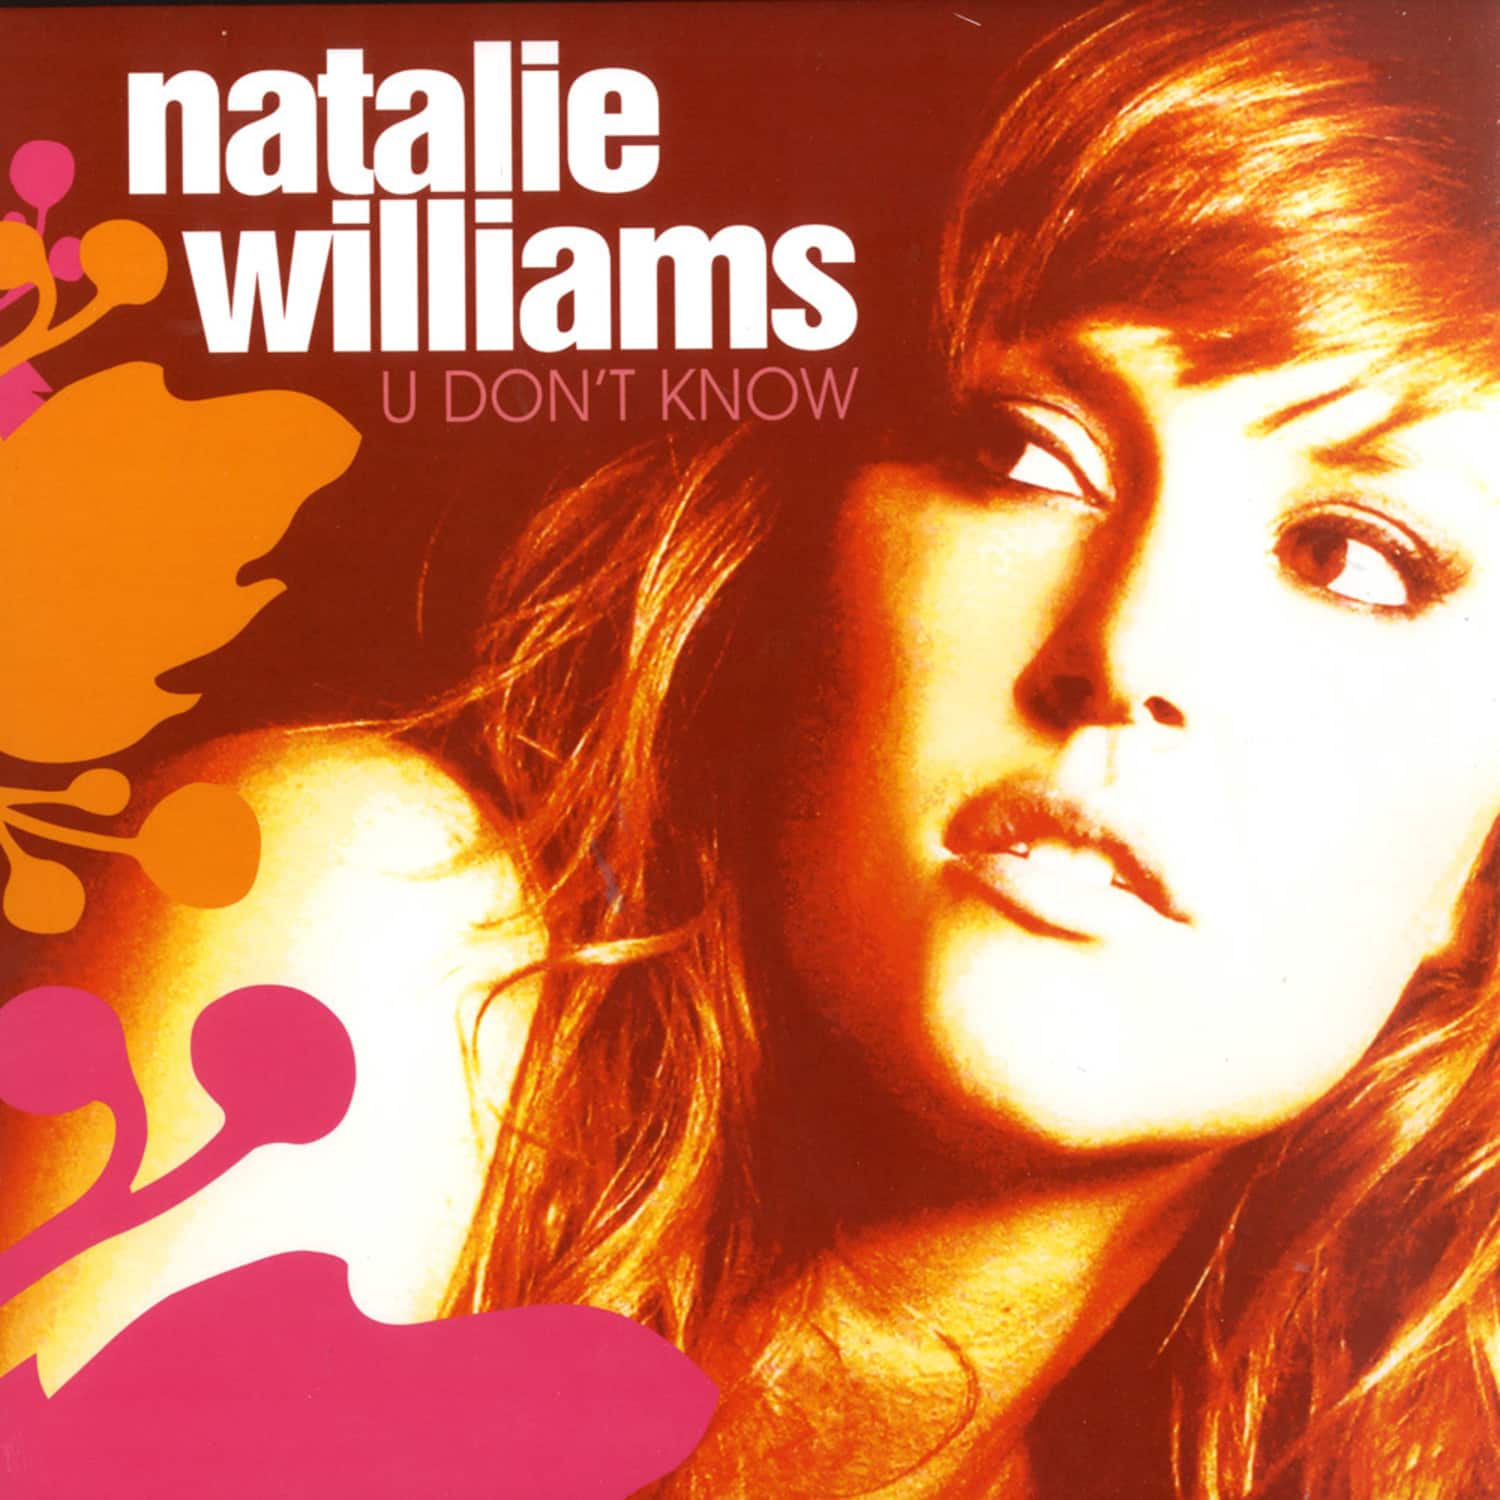 Natalie Williams - U DONT KNOW